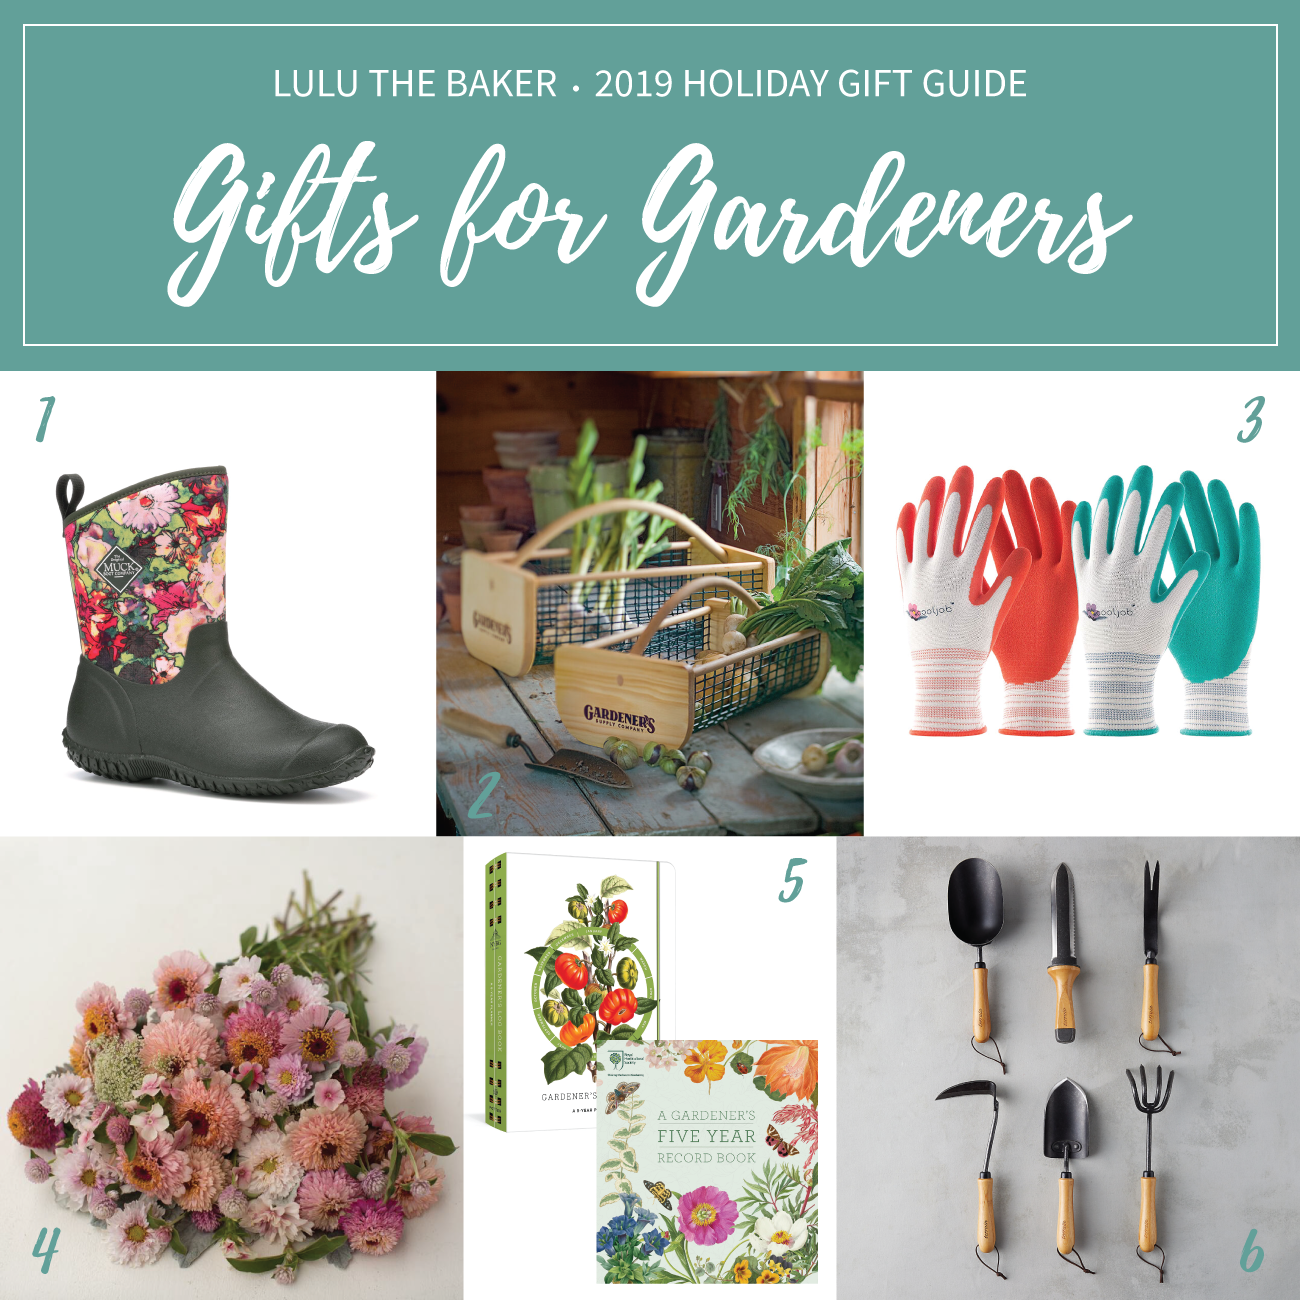 https://luluthebaker.com/wp-content/uploads/2019/12/gifts-for-gardeners.png